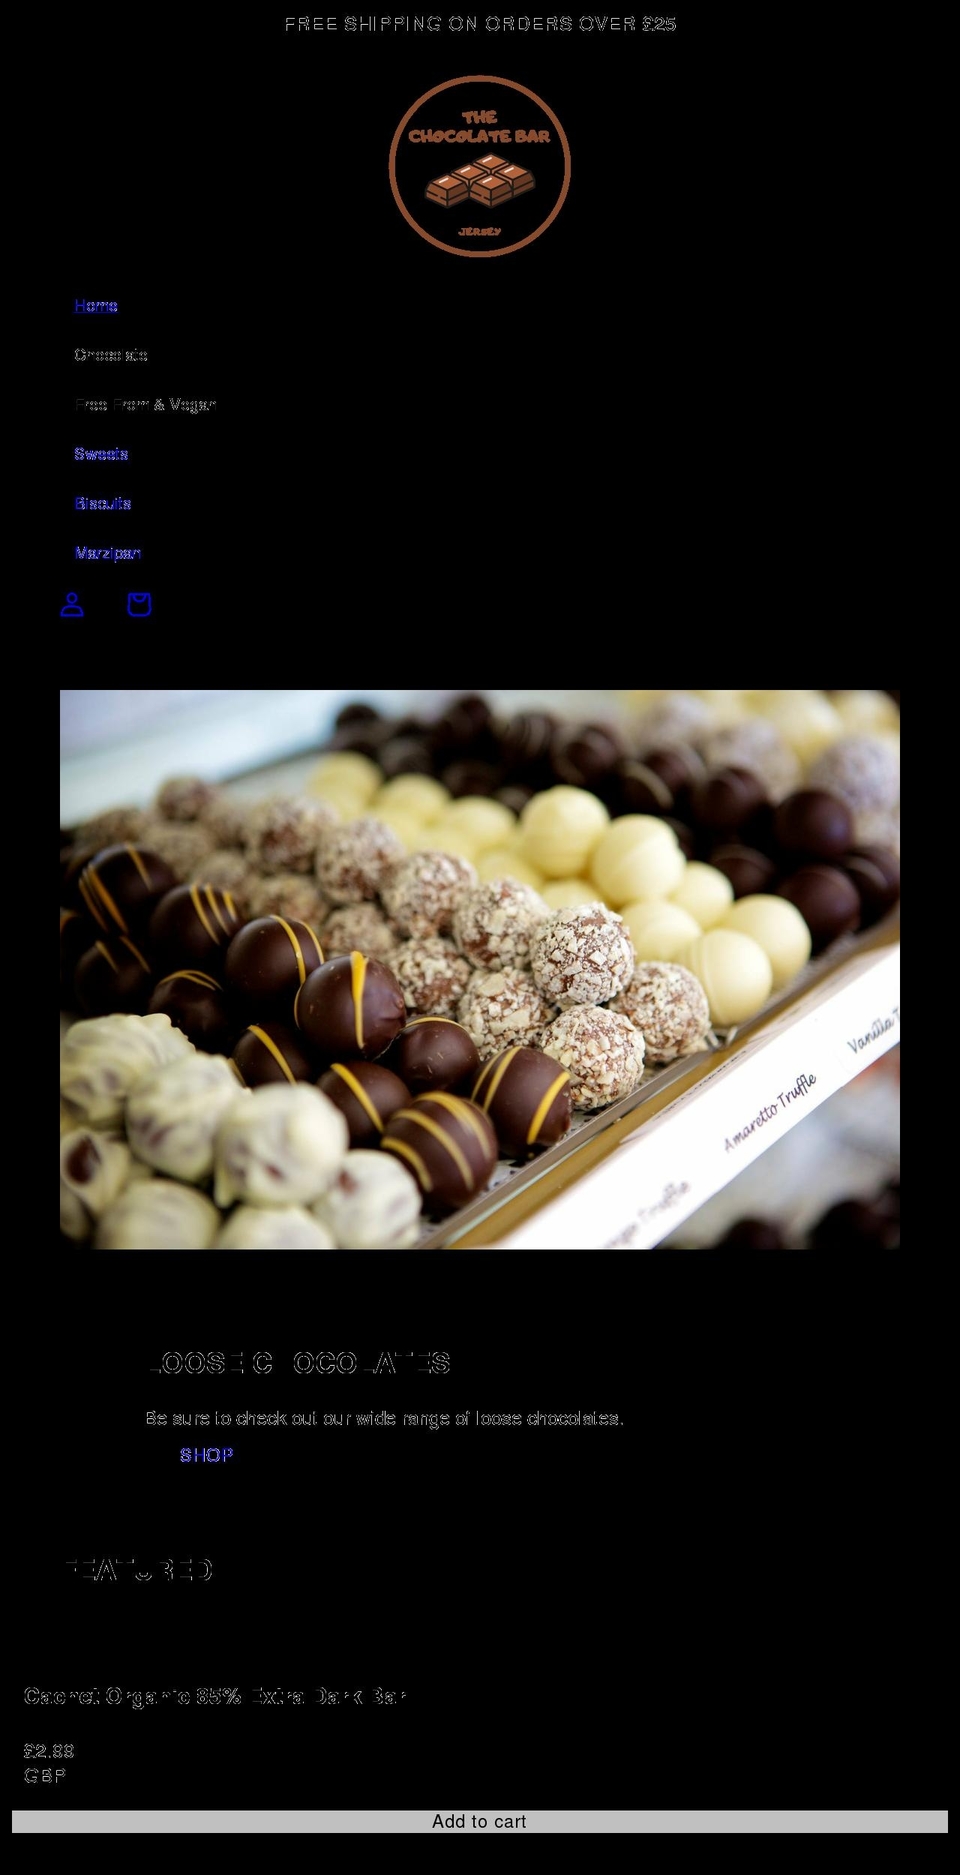 thechocolatebar.je shopify website screenshot